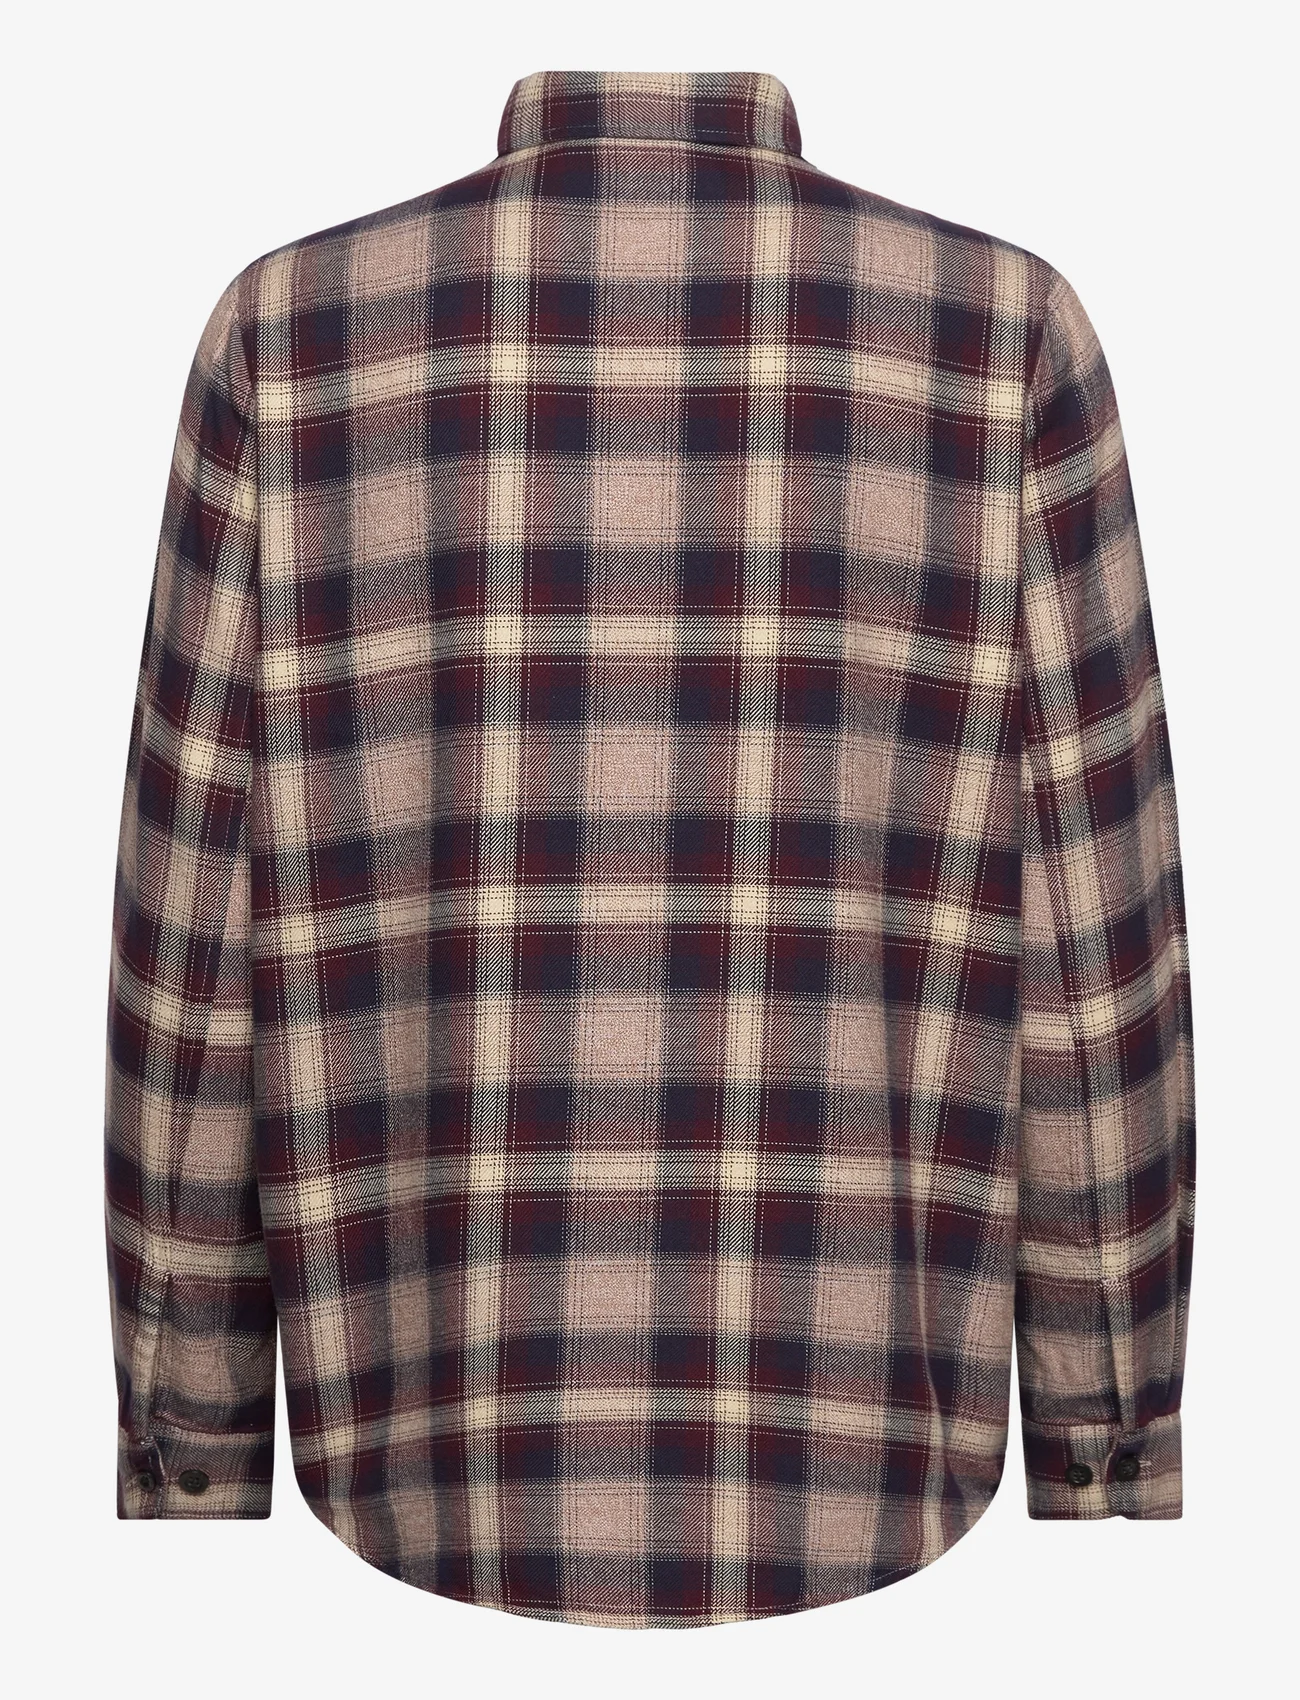 Peak Performance - W Cotton Flannel Shirt-141 CHECK - langärmlige hemden - 141 check - 1